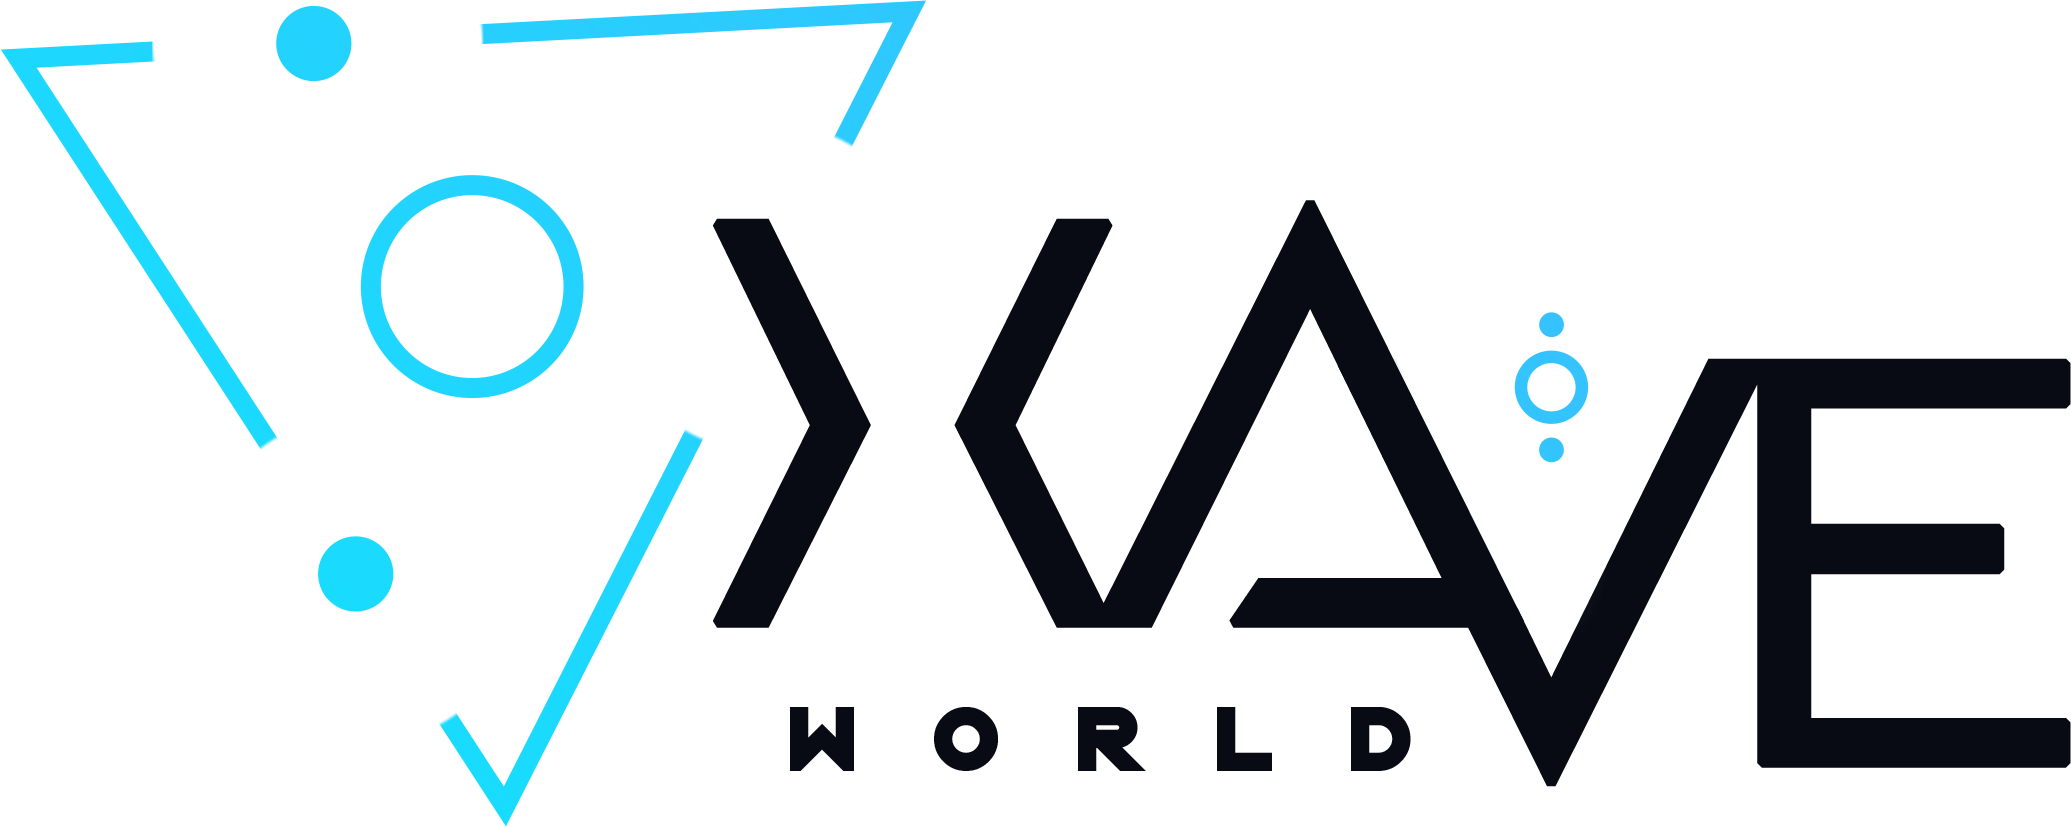 Xave World